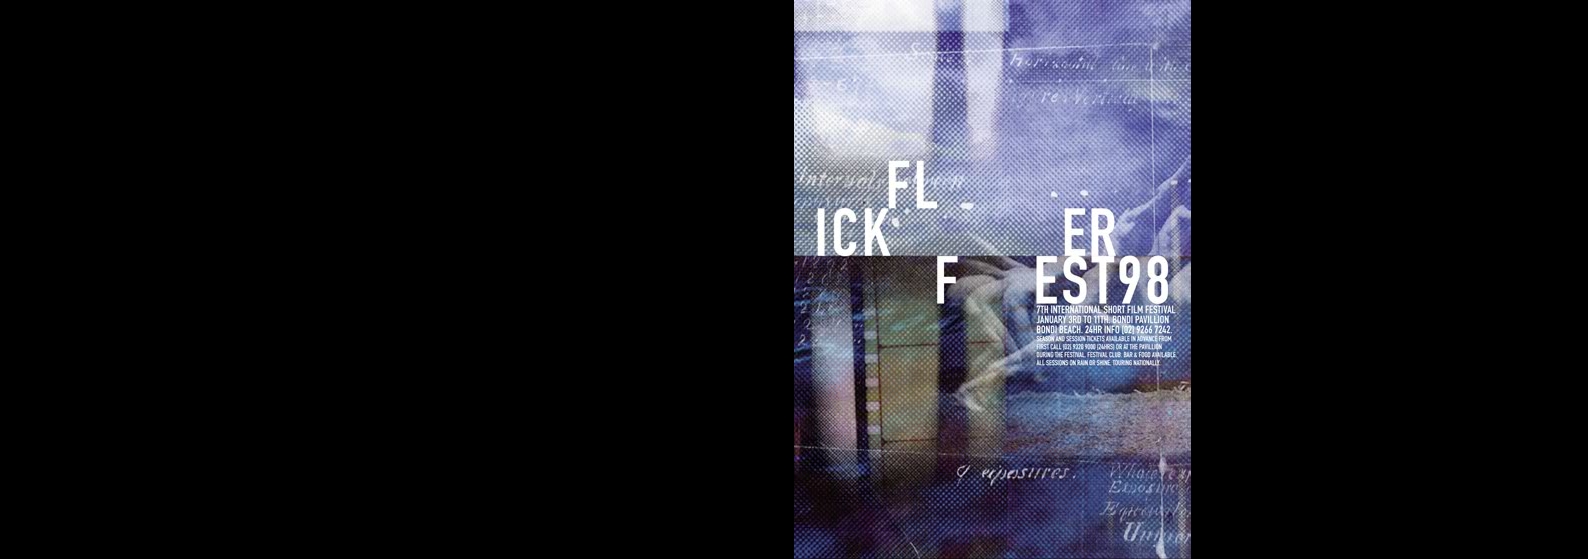 Flickerfest 98 Programme